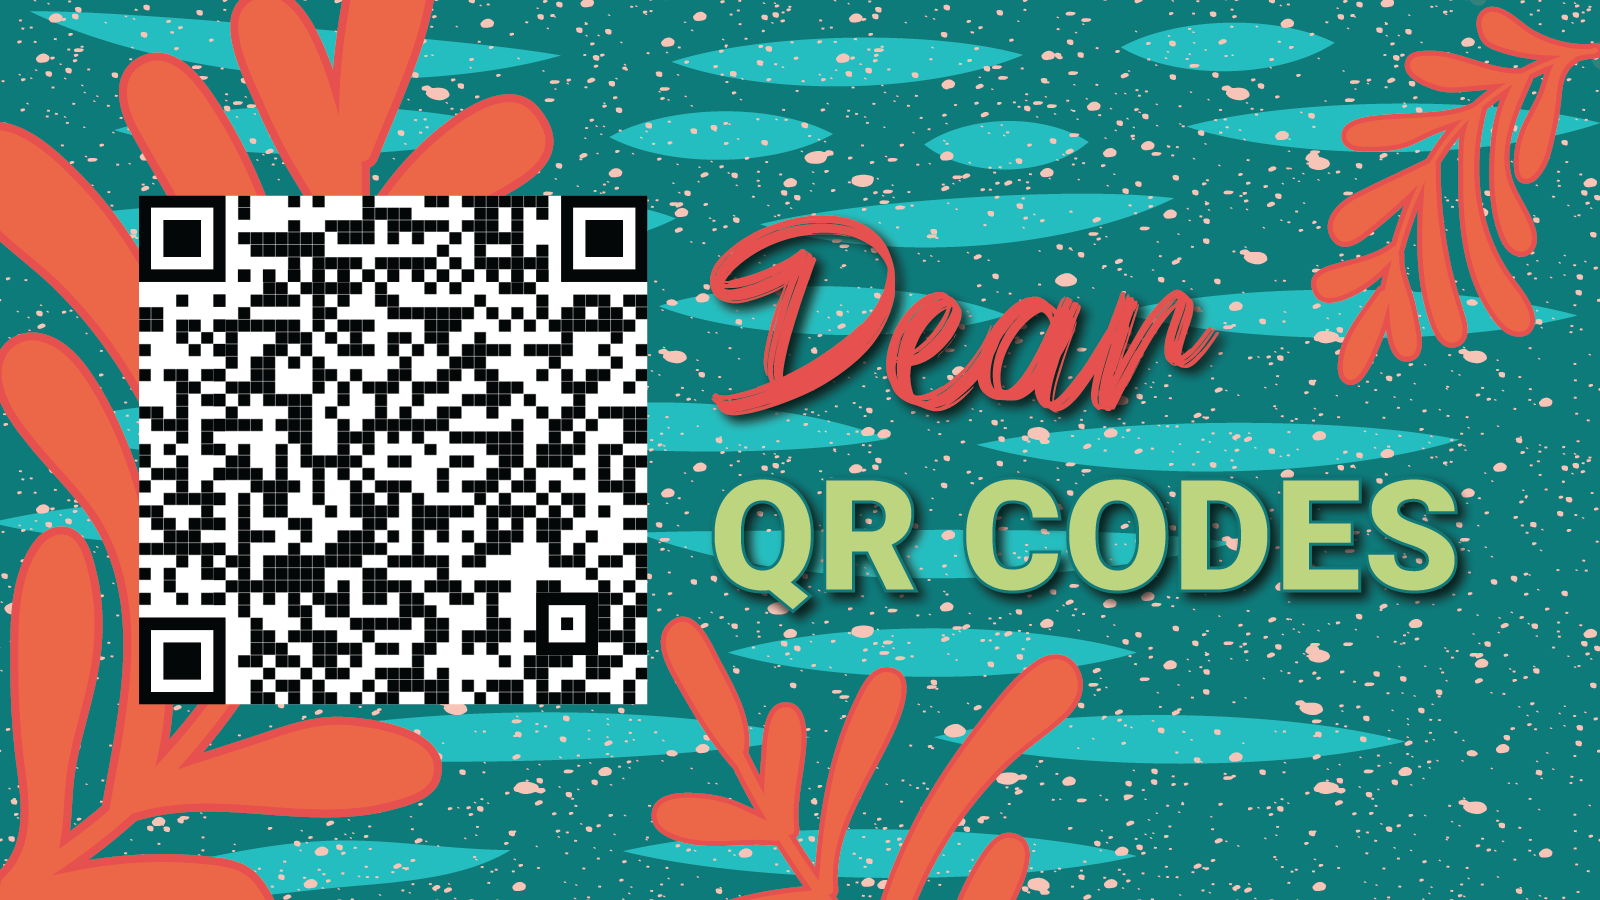 A QR Code sits next to the words "Dear QR Codes"